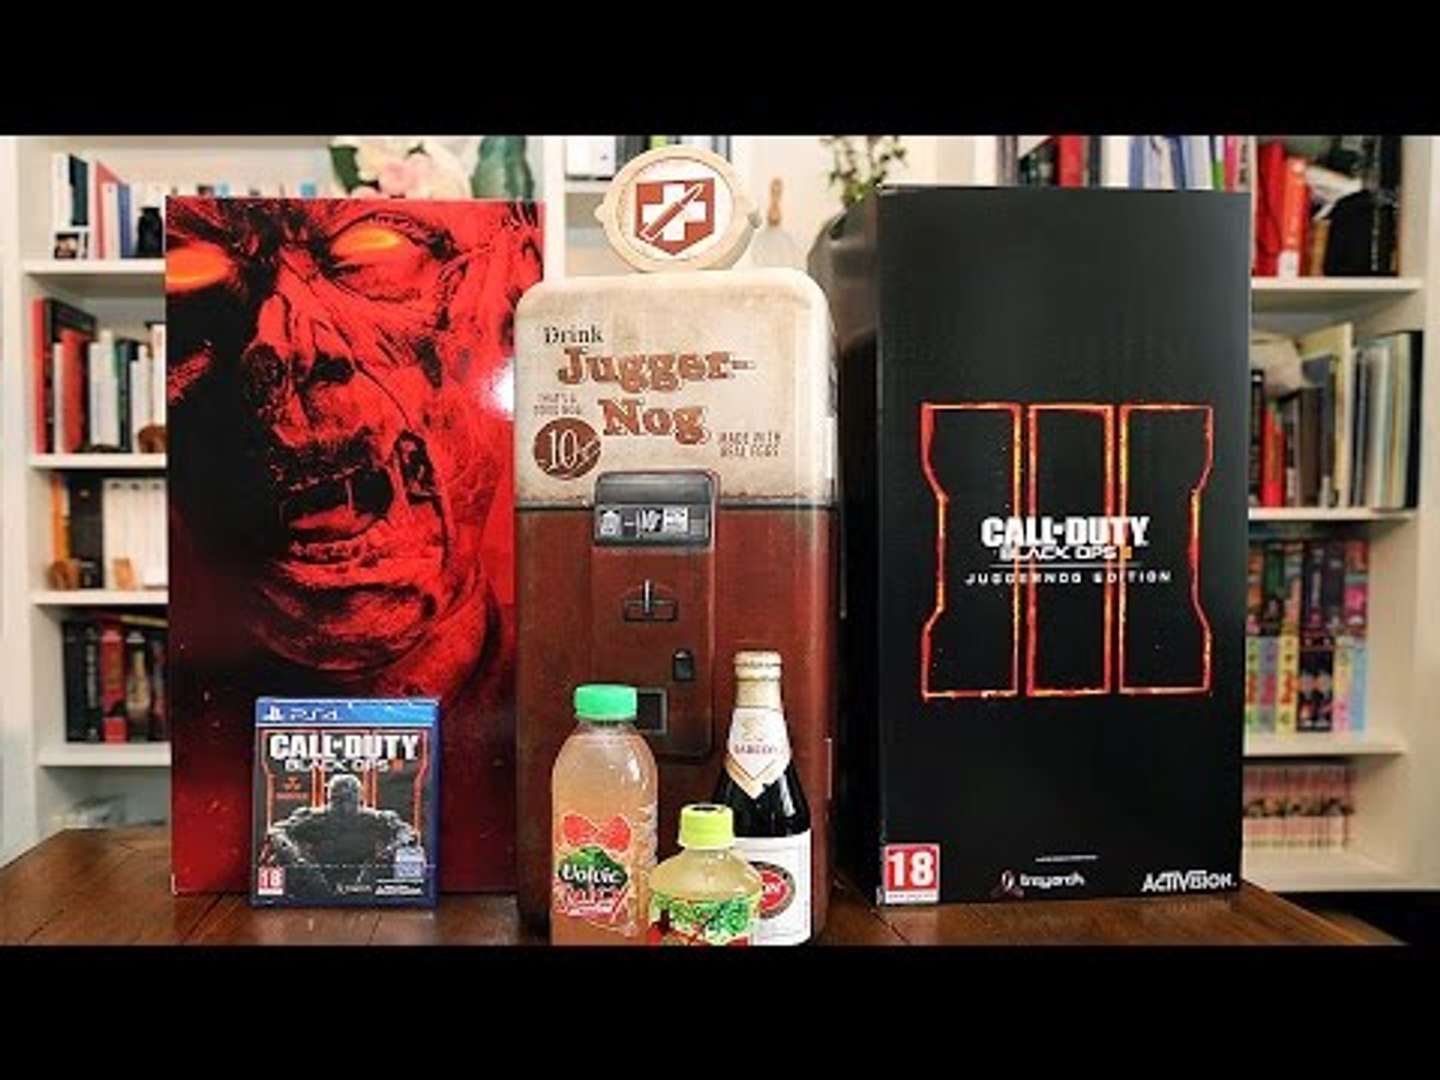 Notre unboxing du frigo CALL OF DUTY Black Ops 3 ! - Vidéo Dailymotion